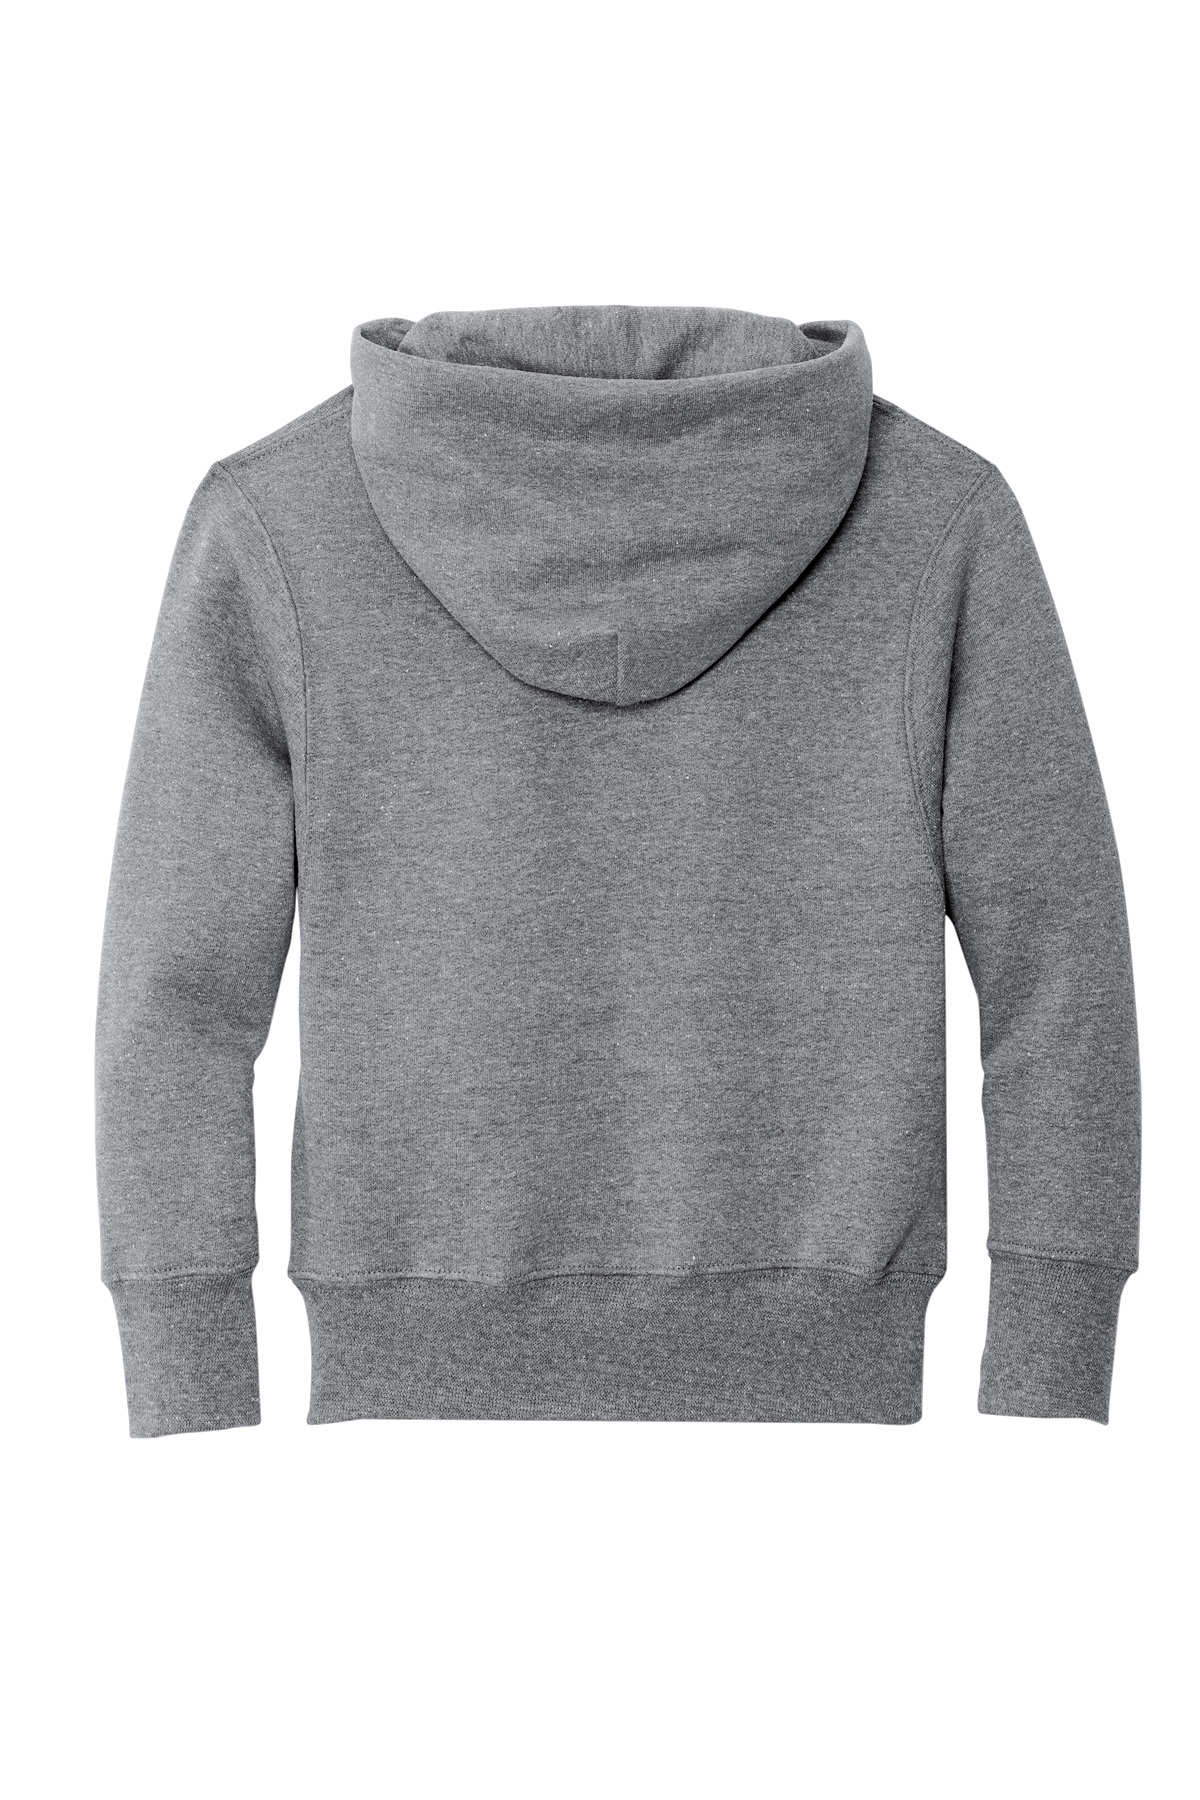 Port & Company | Core Youth SanMar Pullover Hooded Product Sweatshirt Fleece 